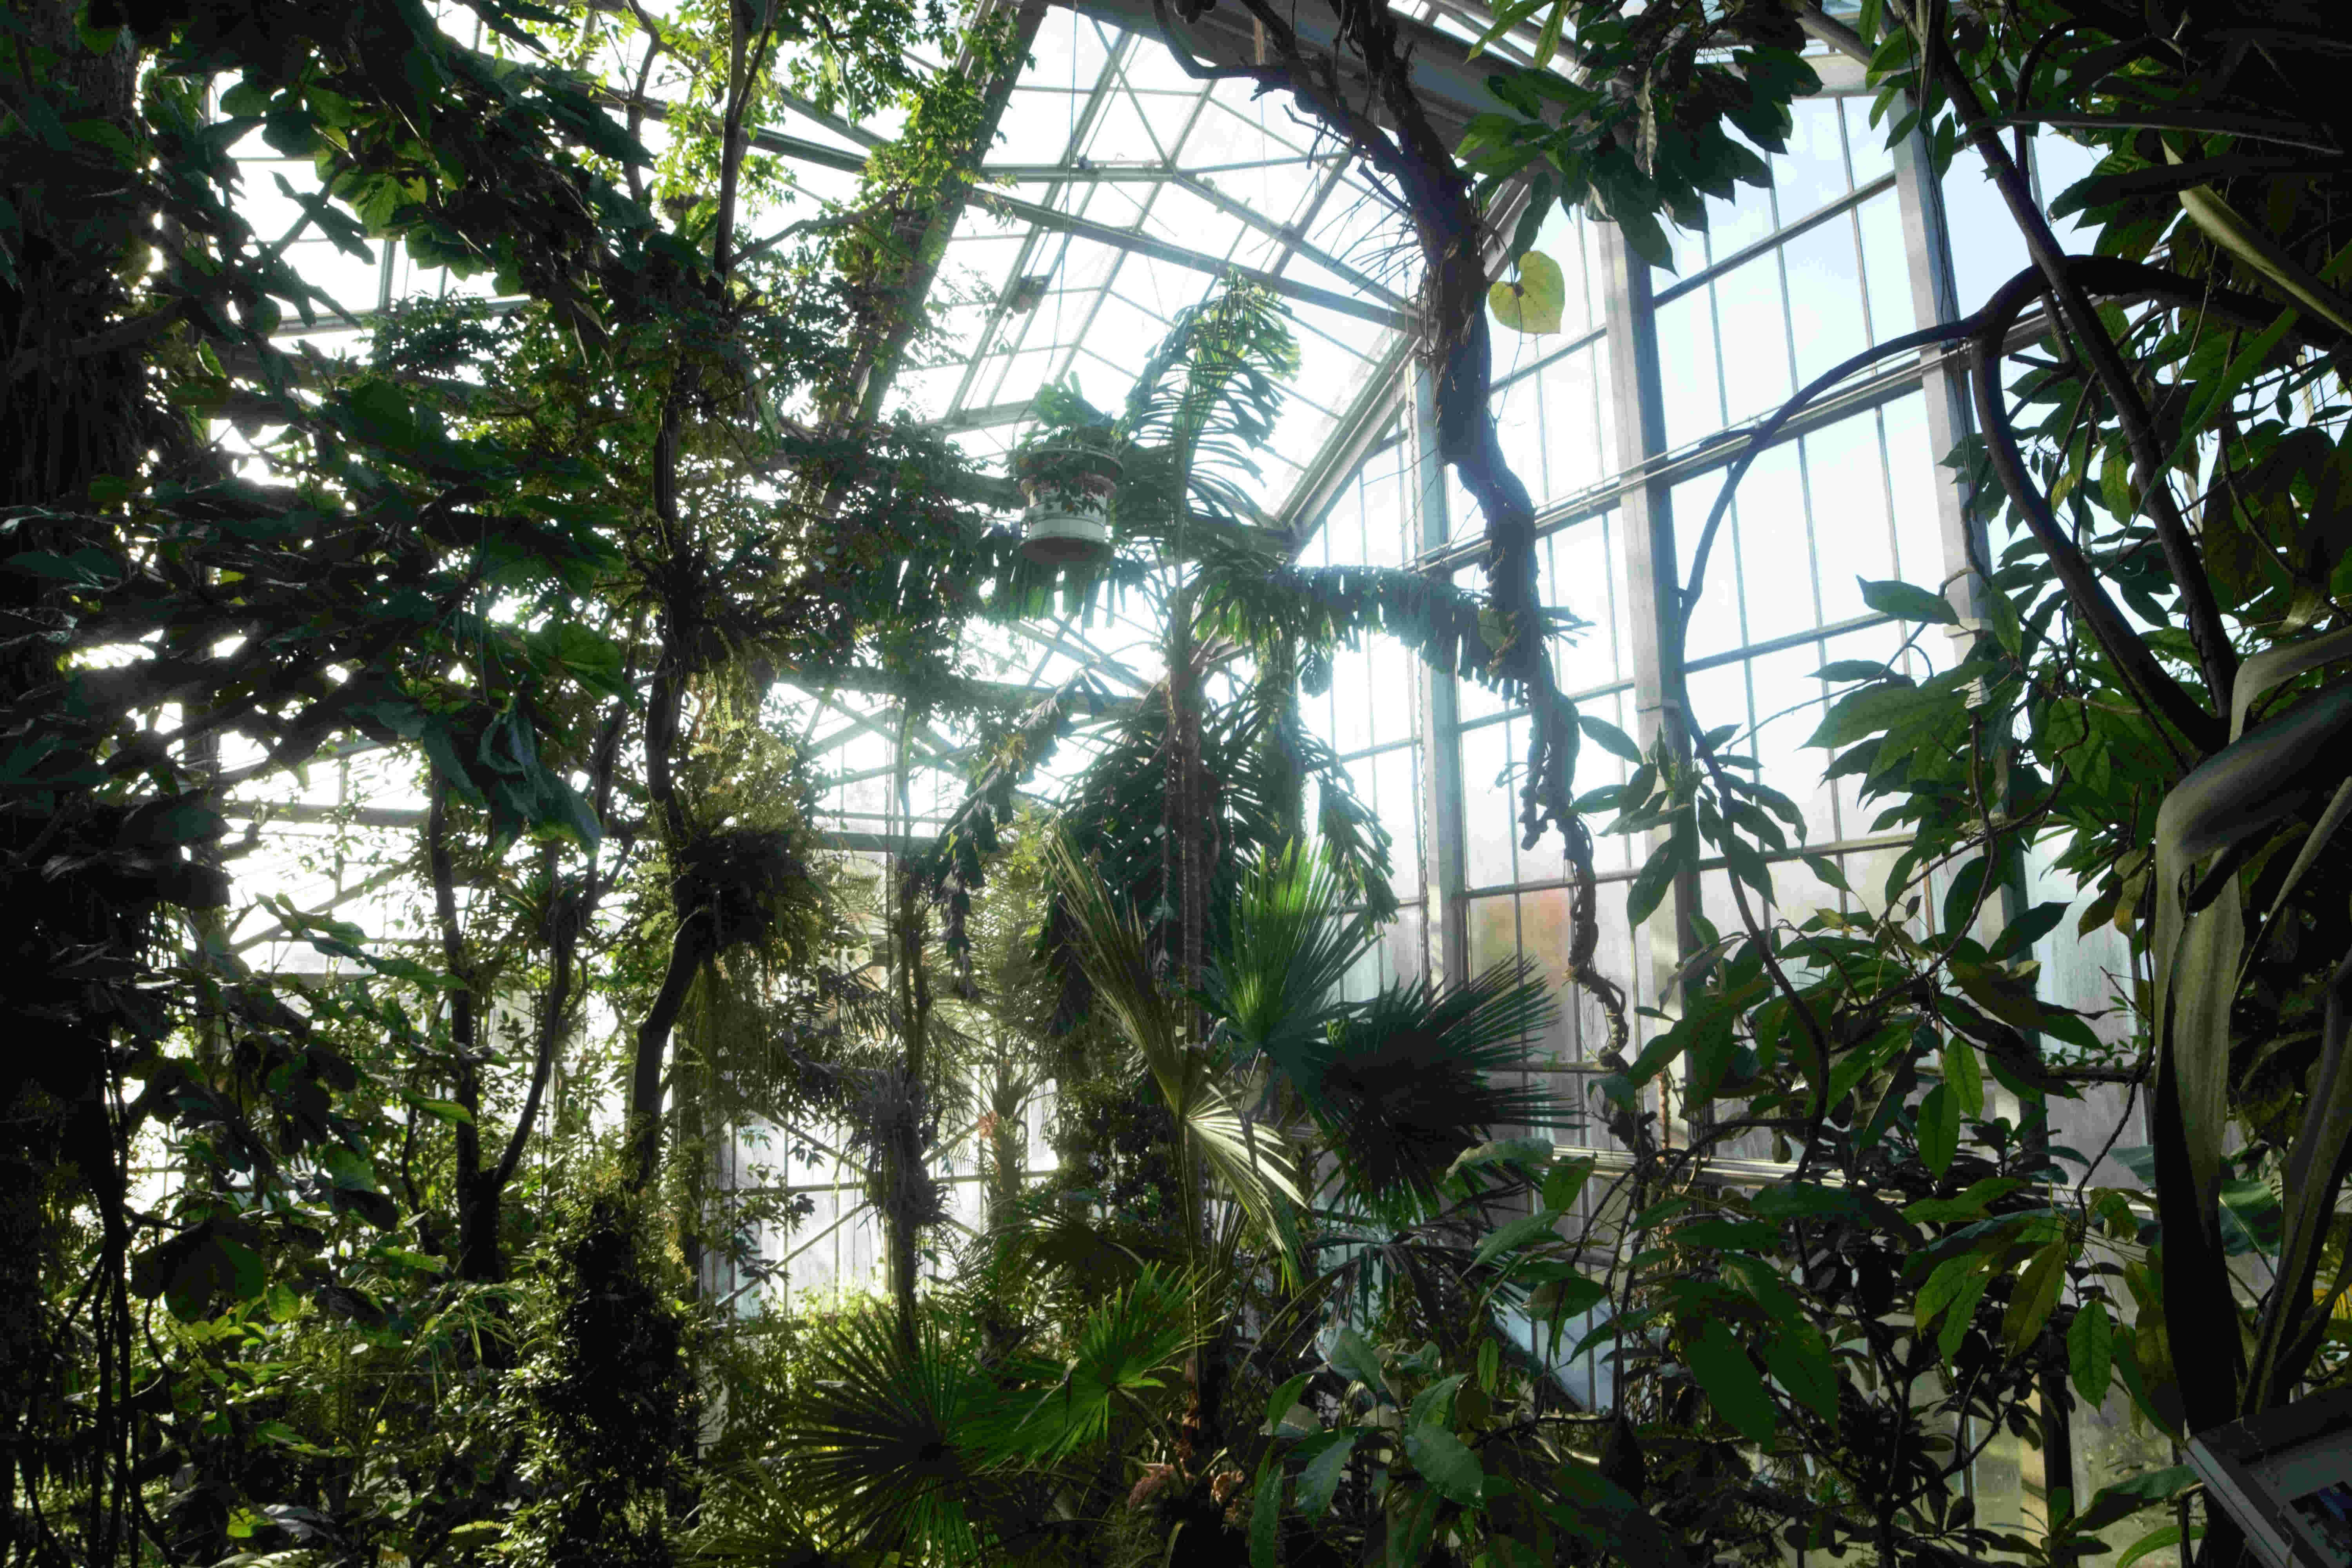 Rainforest House in the Botanical Garden © Botanical Garden